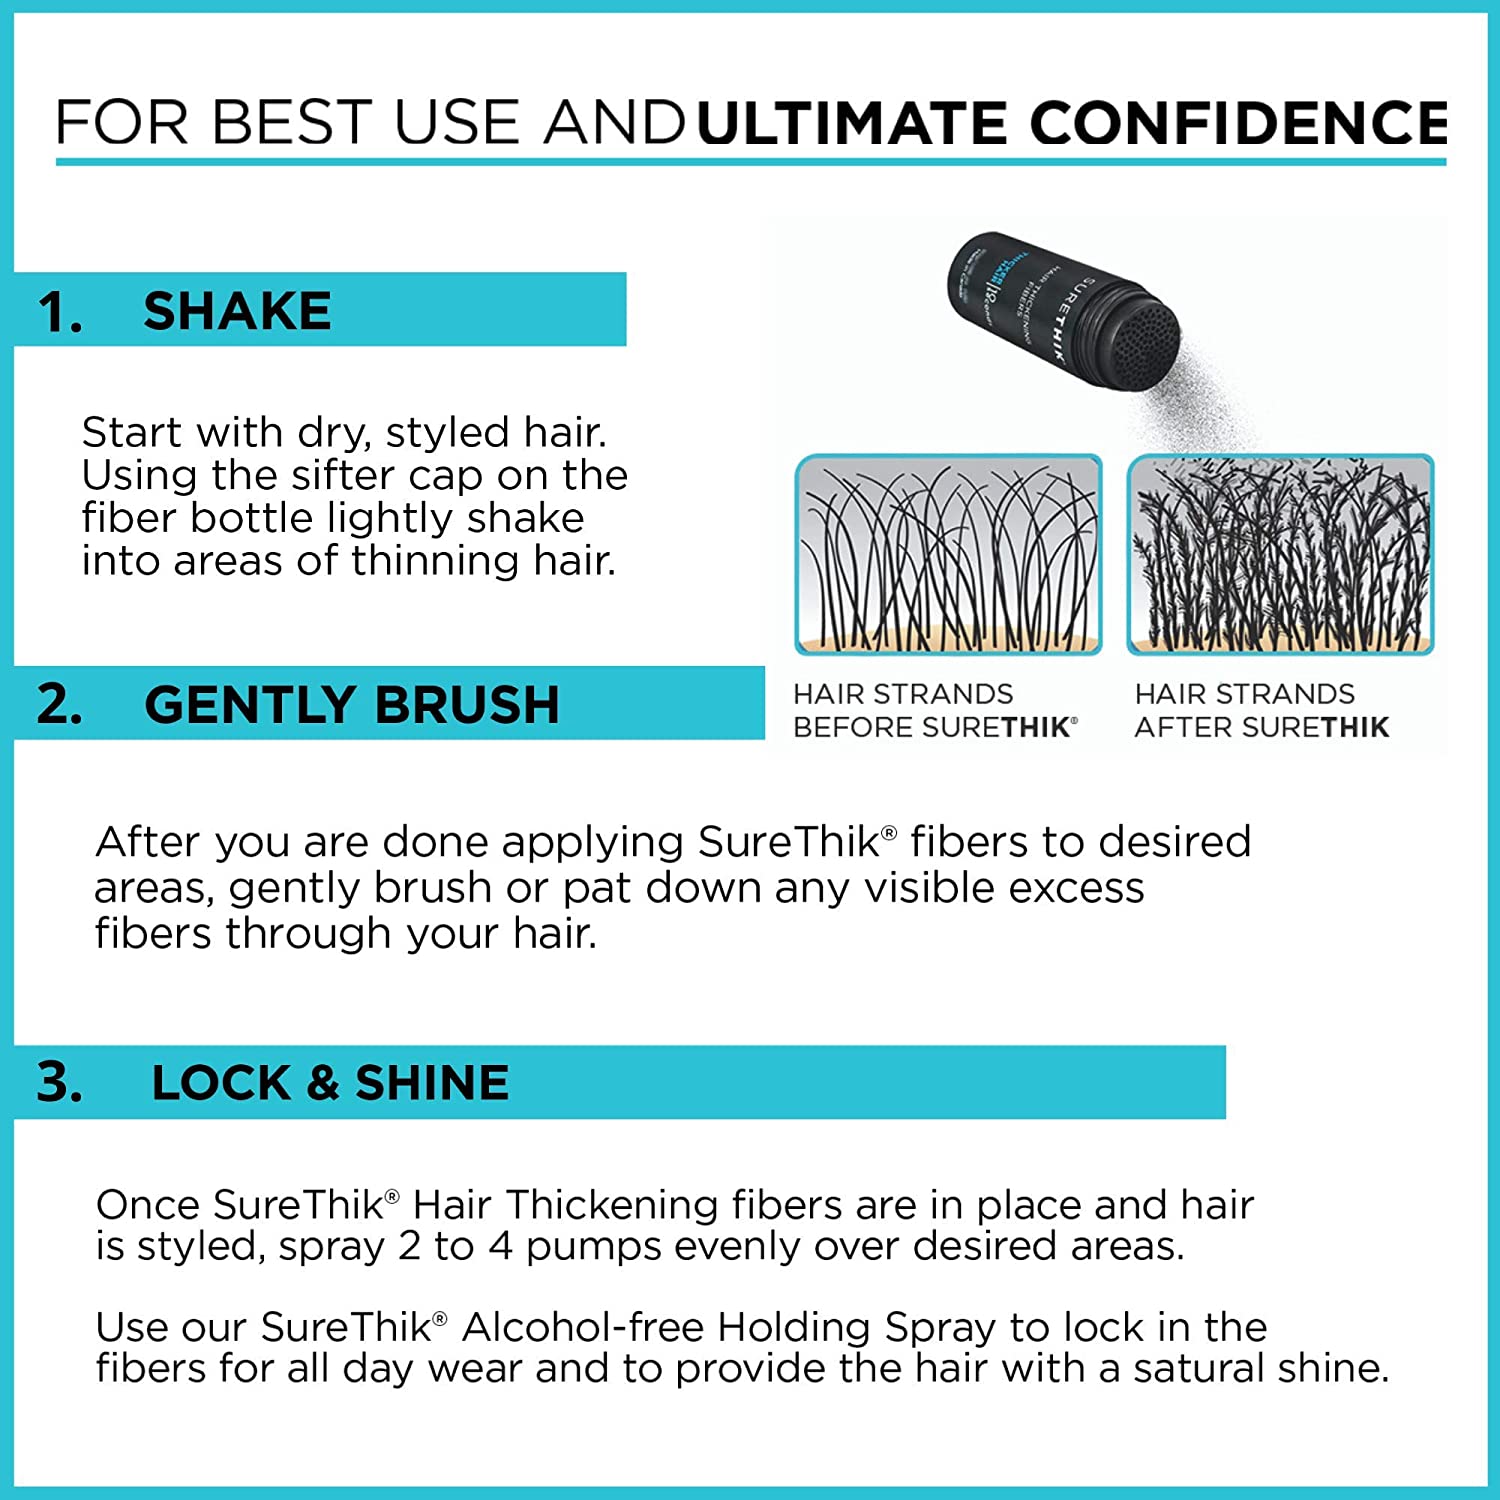 SureThik Hair Thickening Fibers 15g - Pack of 4